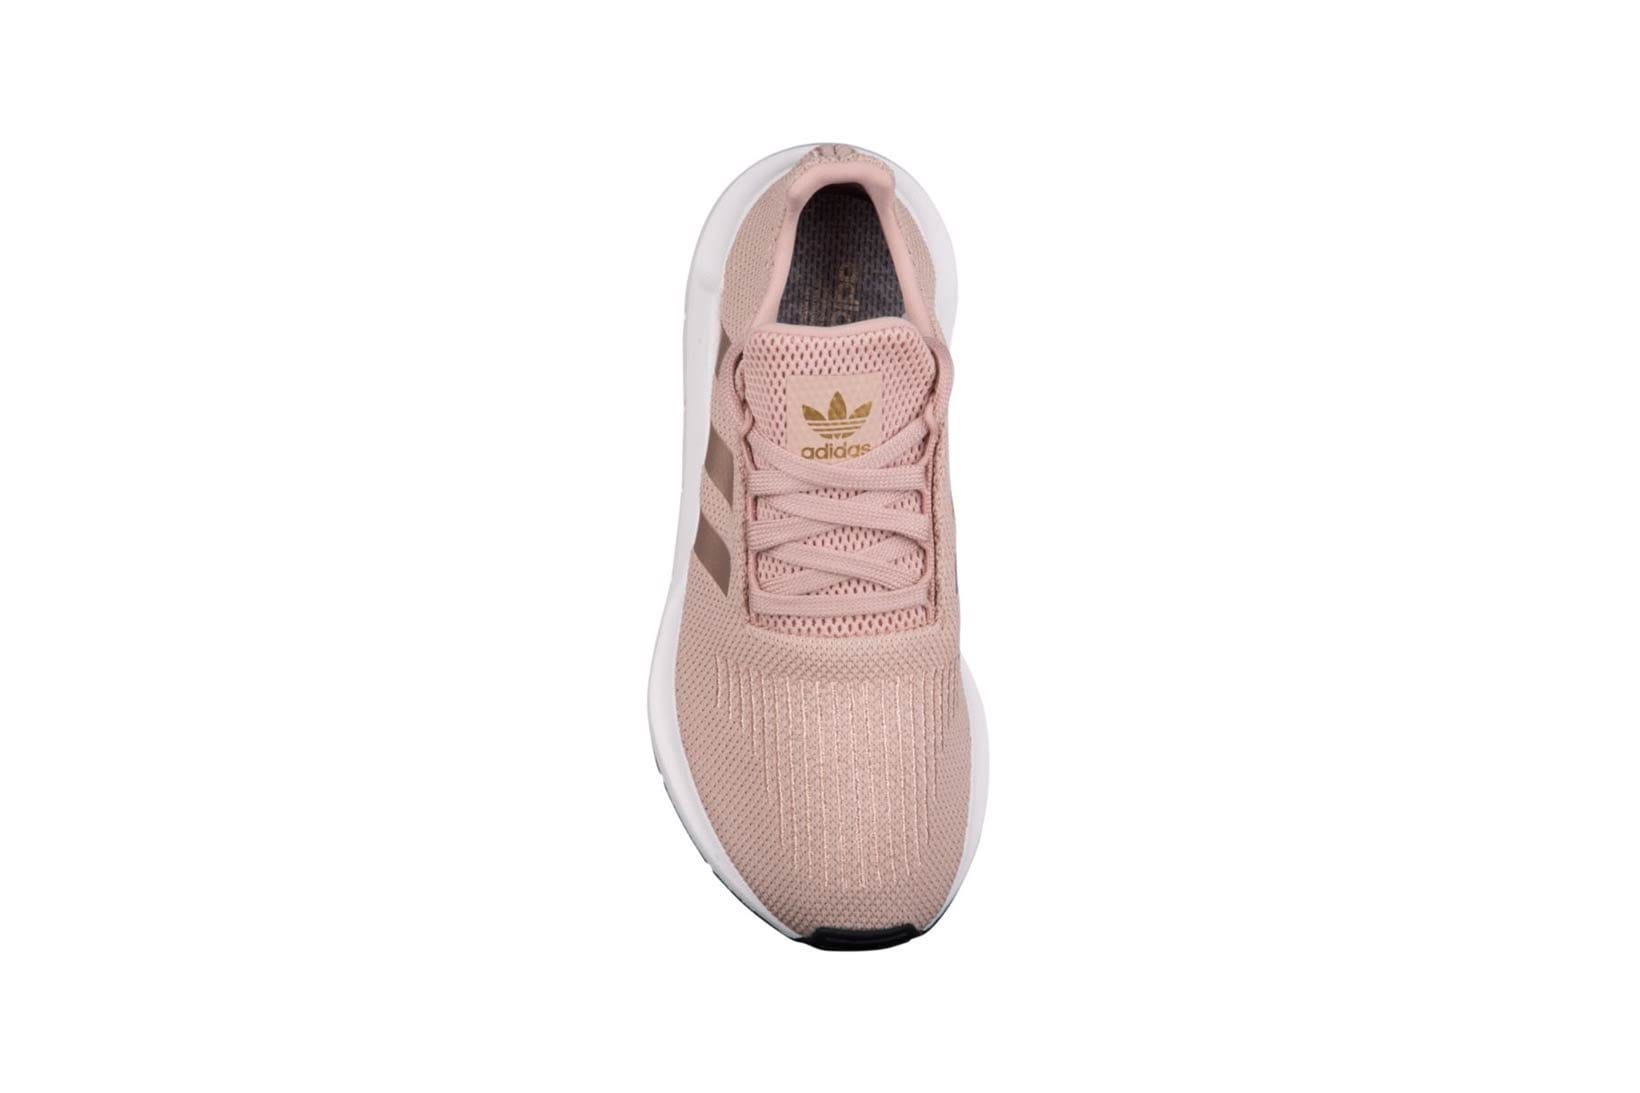 adidas swift run pink and gold